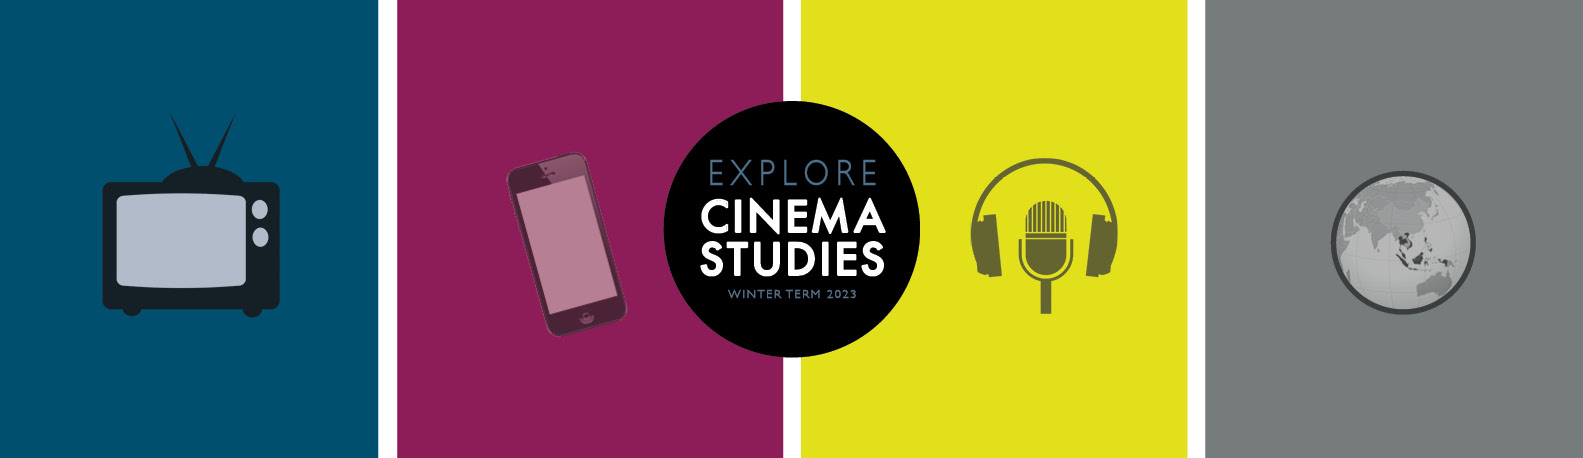 Explore Cinema Studies winter term 2023 courses